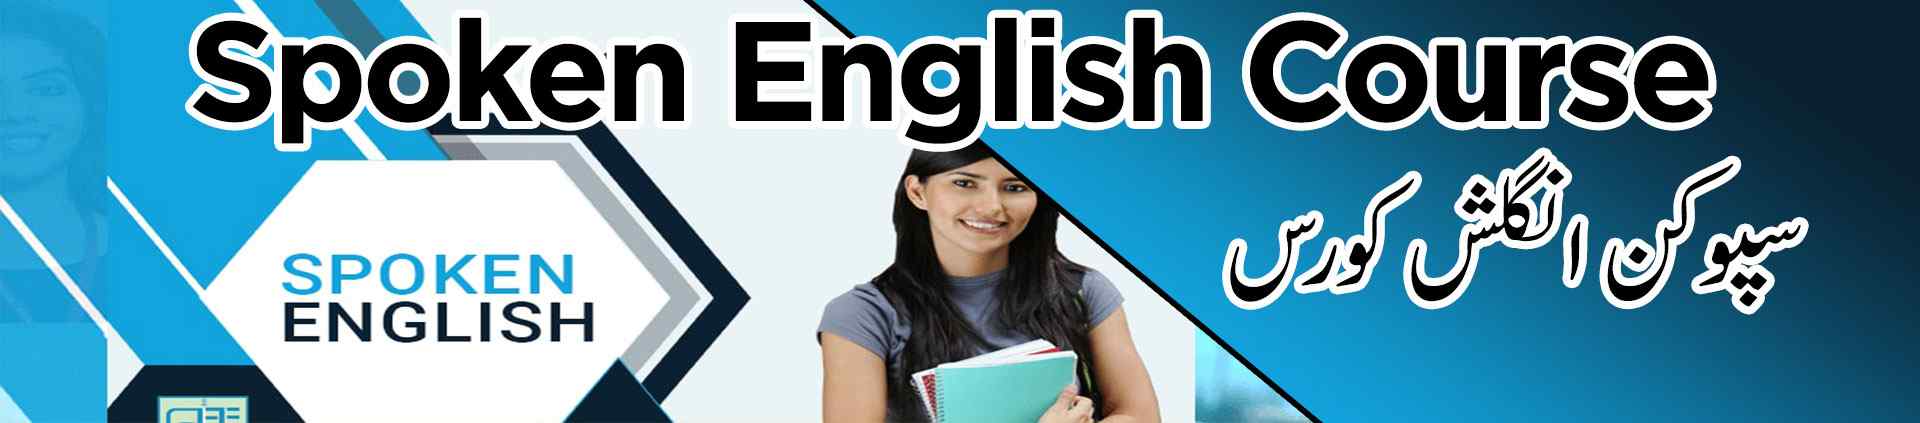 spoken english course mutlan